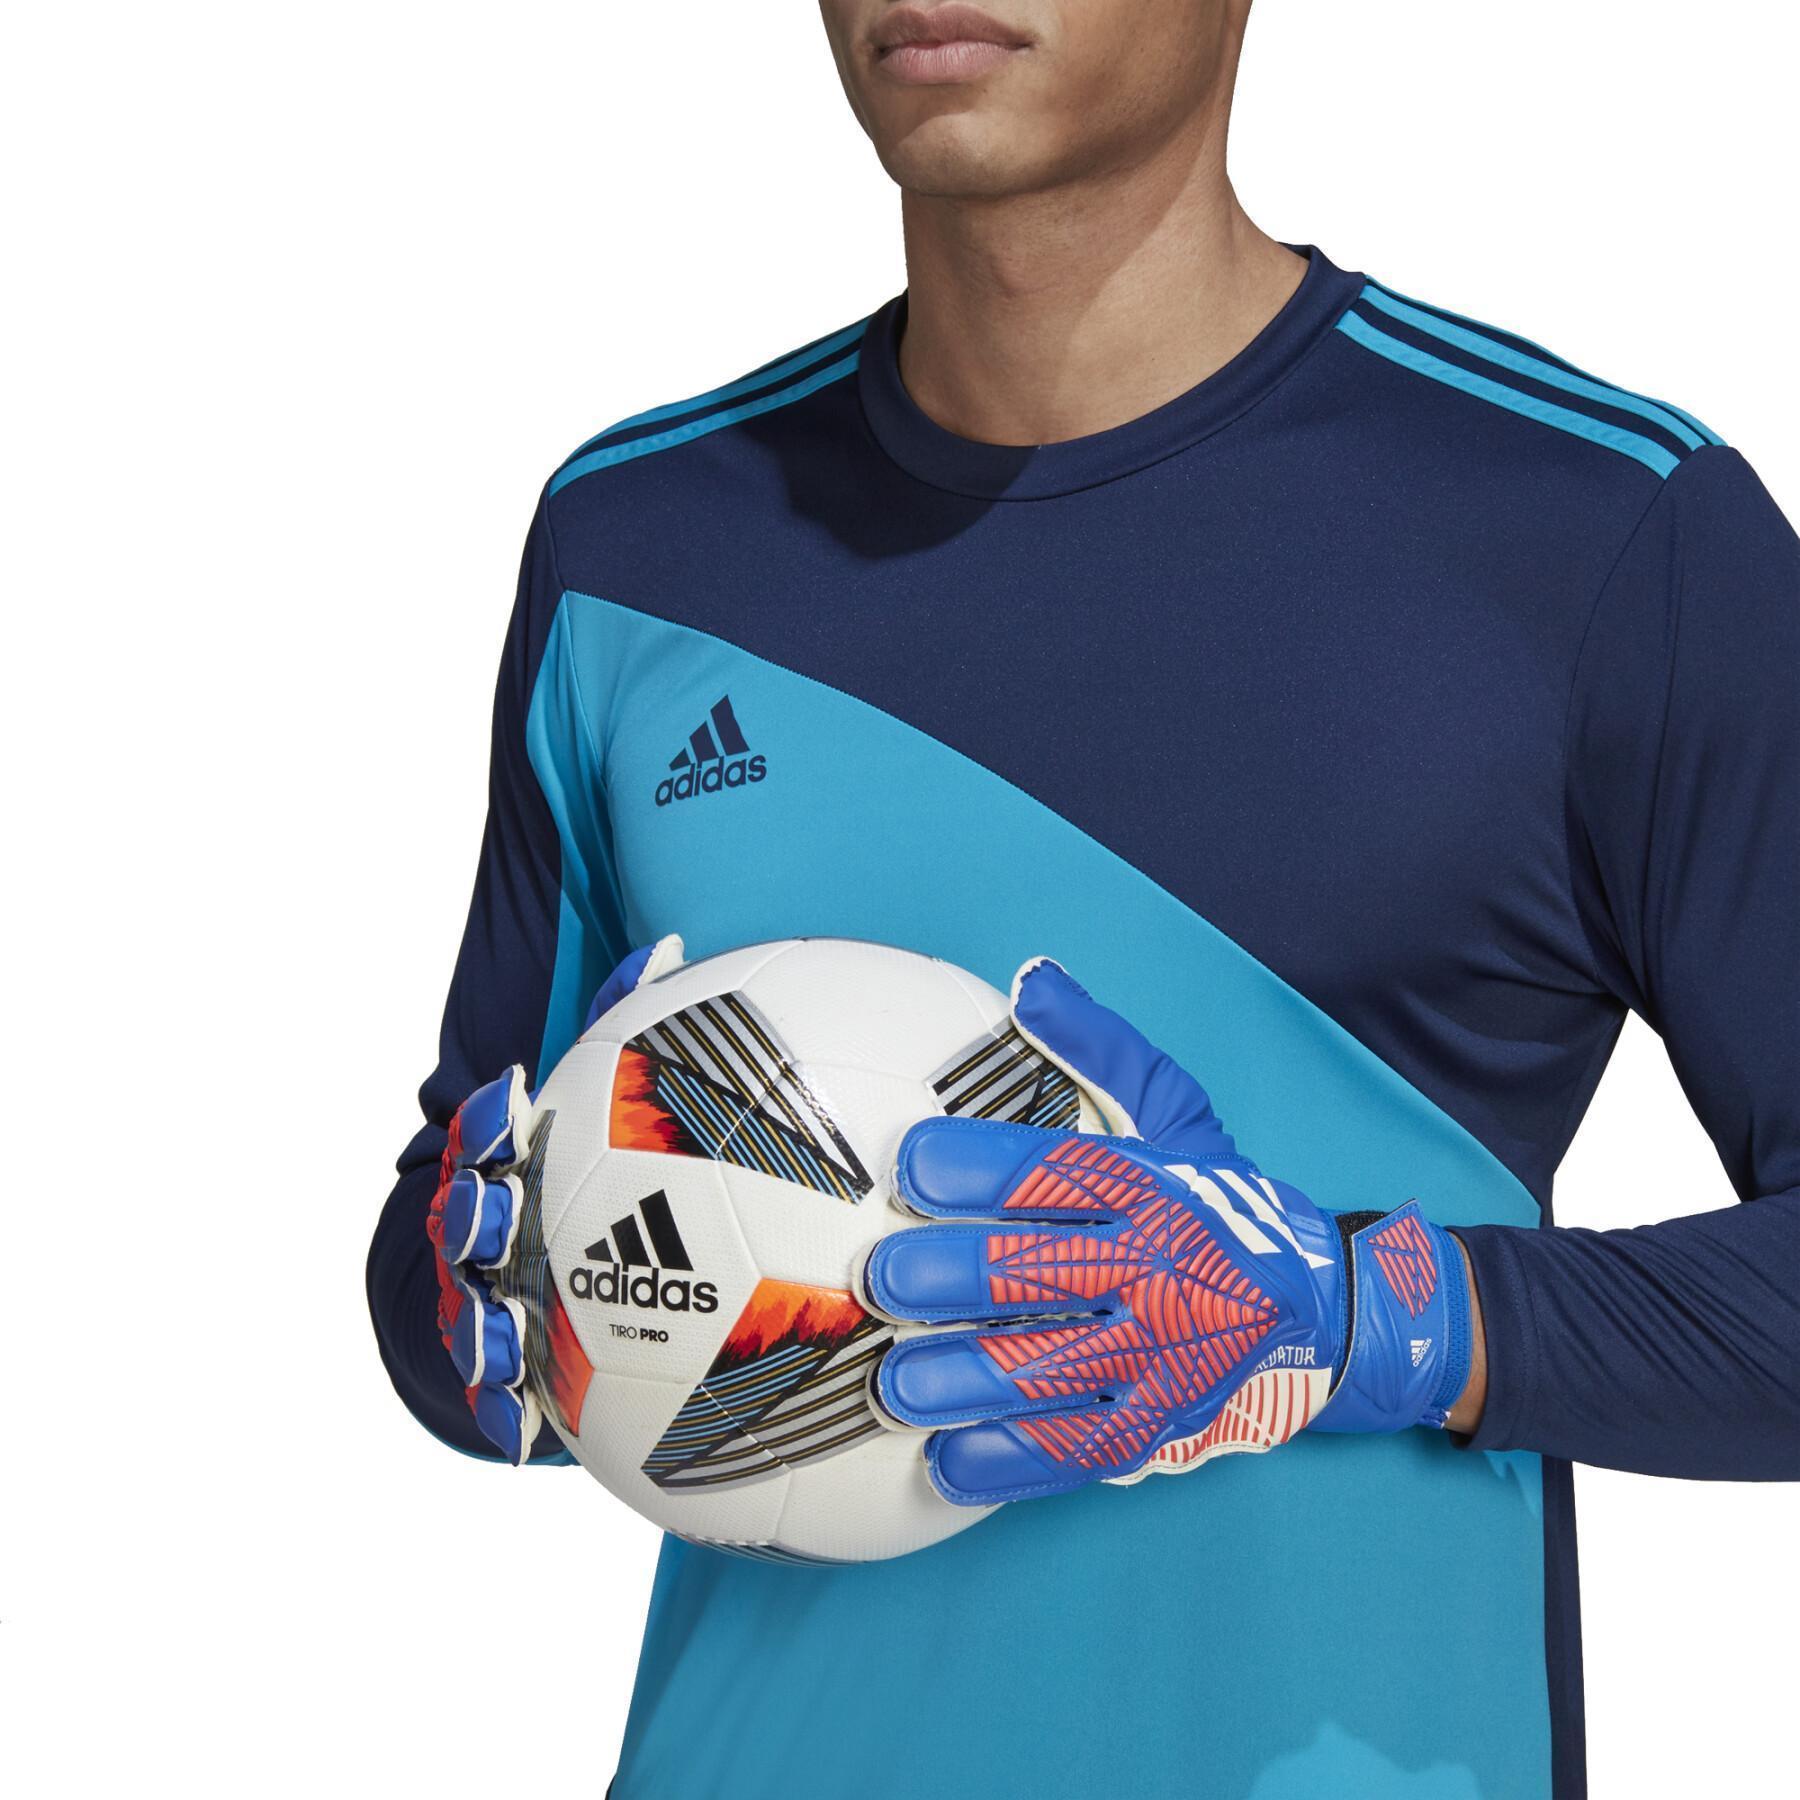 Goalkeeper gloves adidas Predator Training